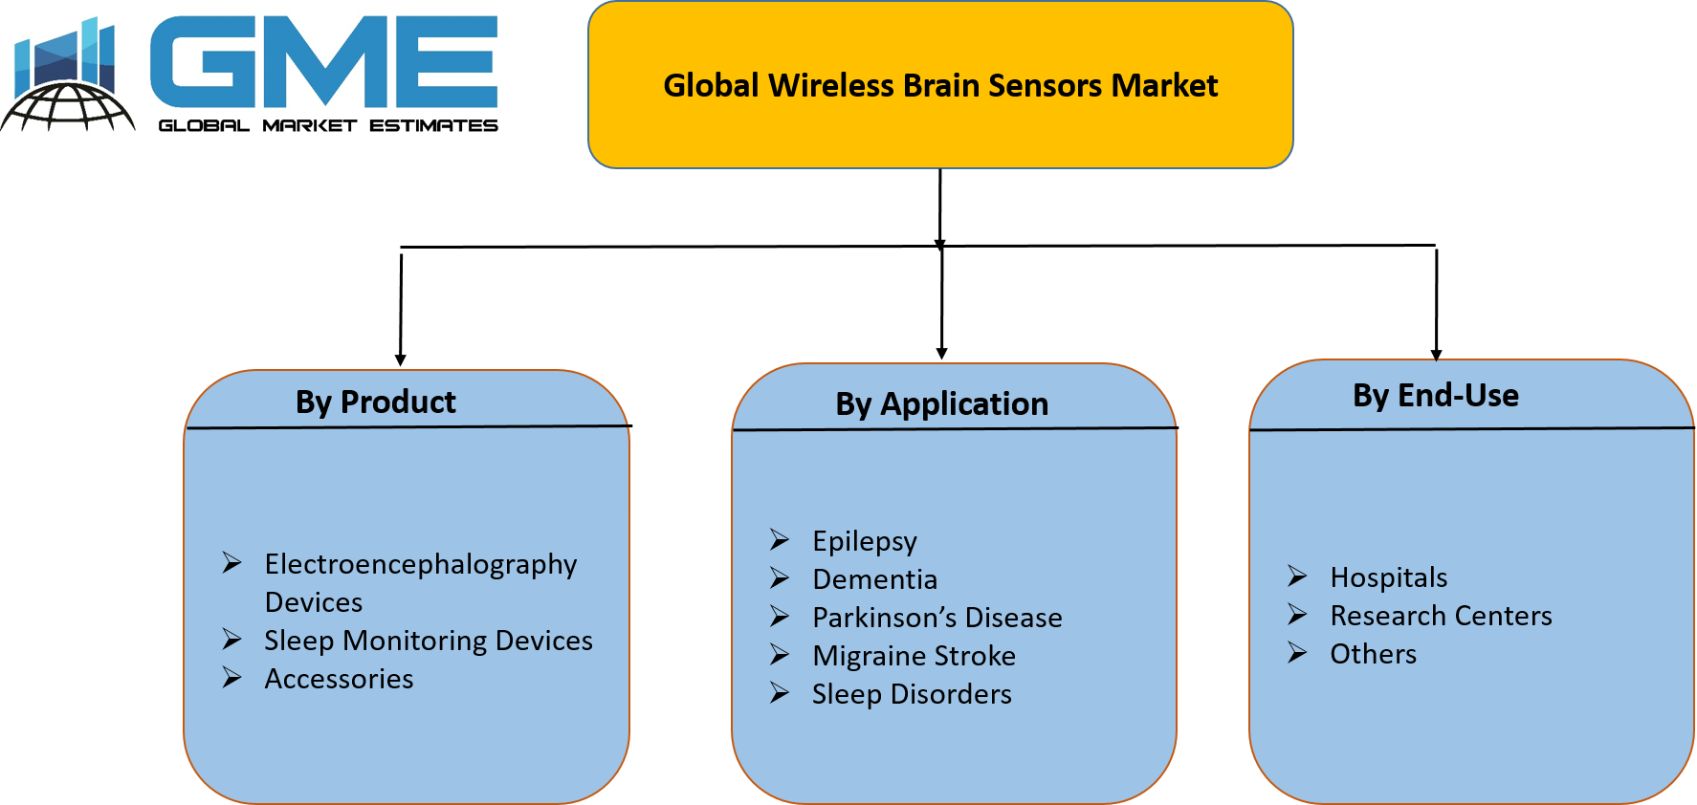 Global Wireless Brain Sensors Market Segmentation